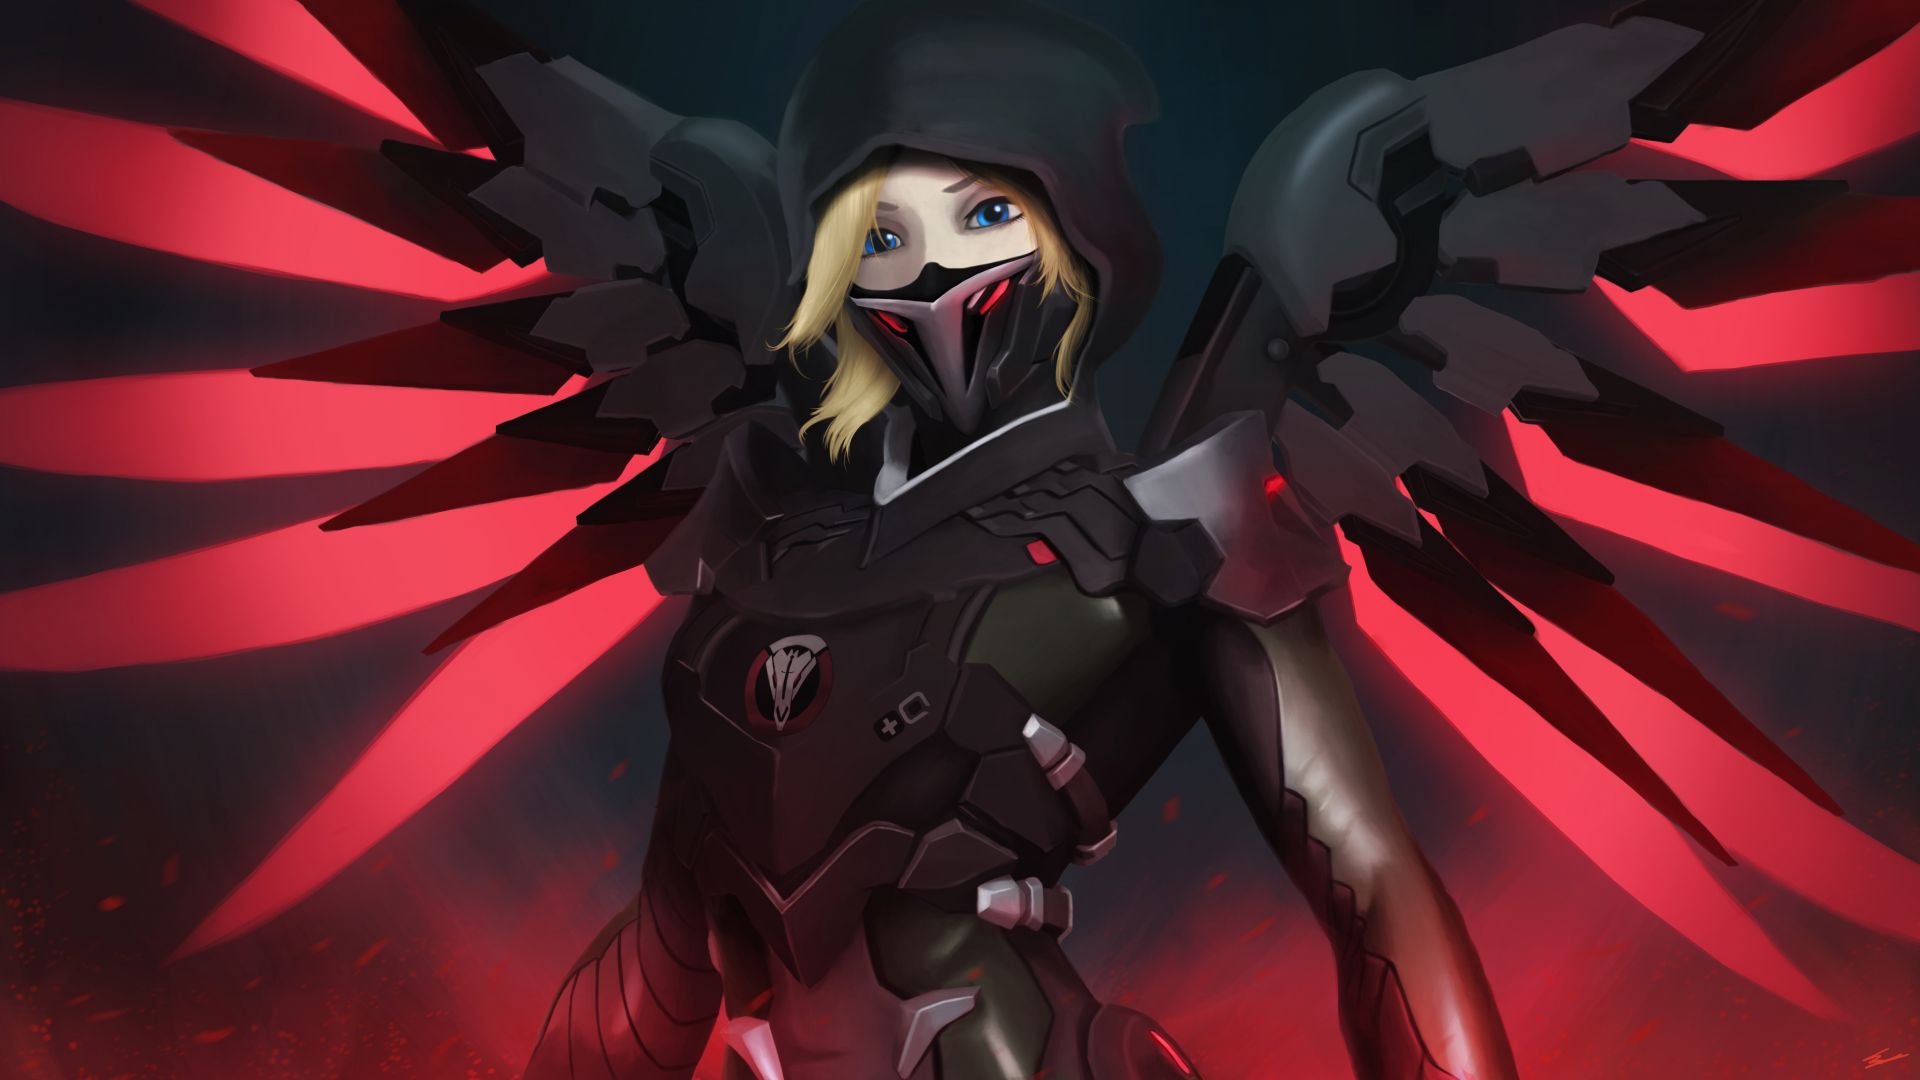 Wallpaper Mercy, dark, overwatch, mask, red wings